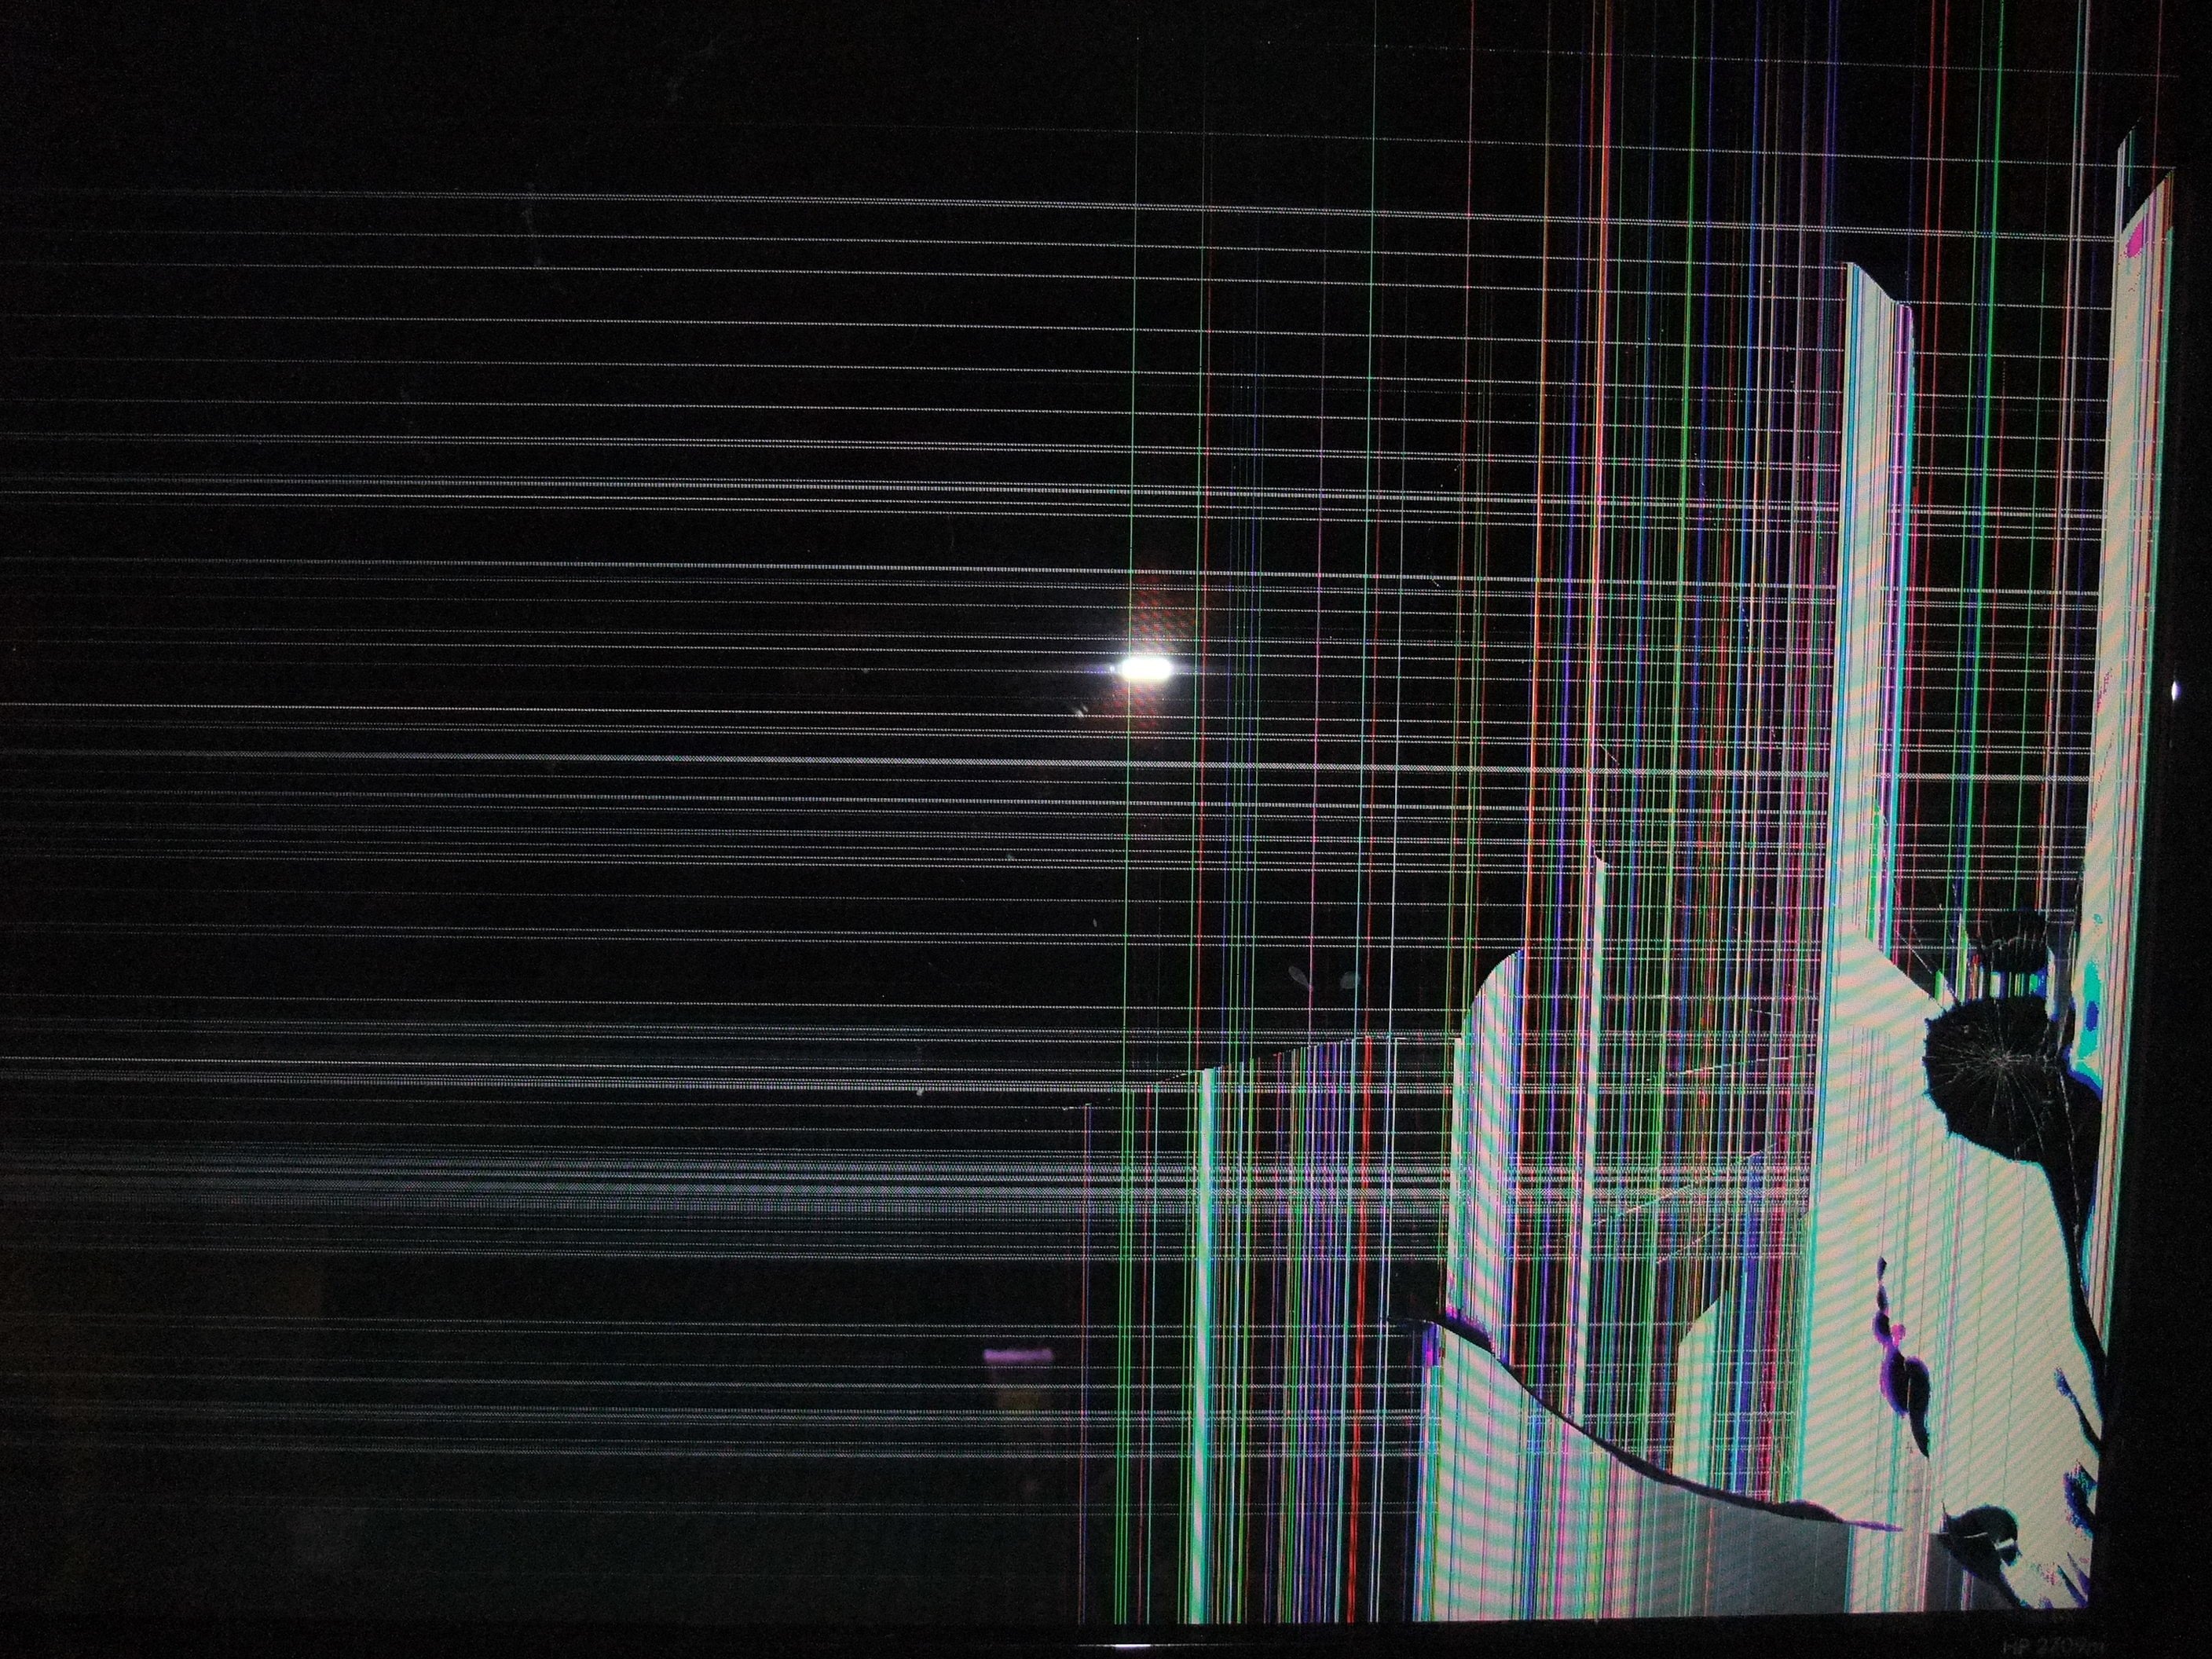 Разбитый экран фото для пранка. Разбитый экран. Разбитый монитор. Разбитый экран телевизора. Разбитый экрантелефизора.